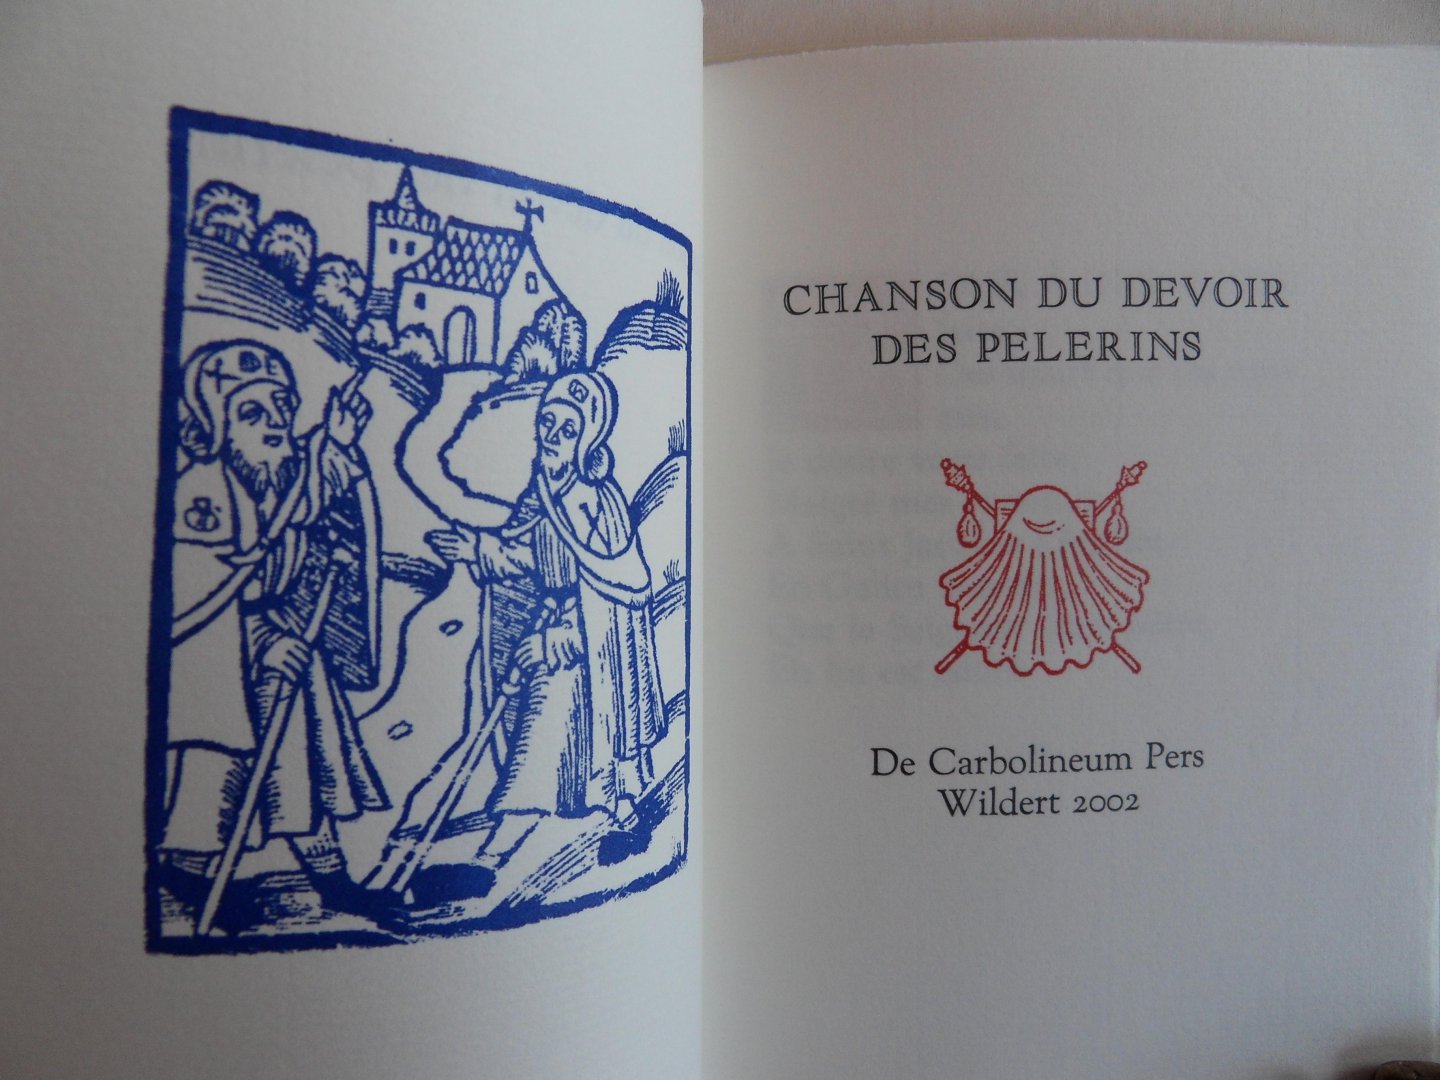 Pelgrims St. Jacques de Compostelle (afkomstig uit dat Liedboek). - Chanson du Devoir des Pelerins. [ Genummerd exemplaar 22 / 50 ].